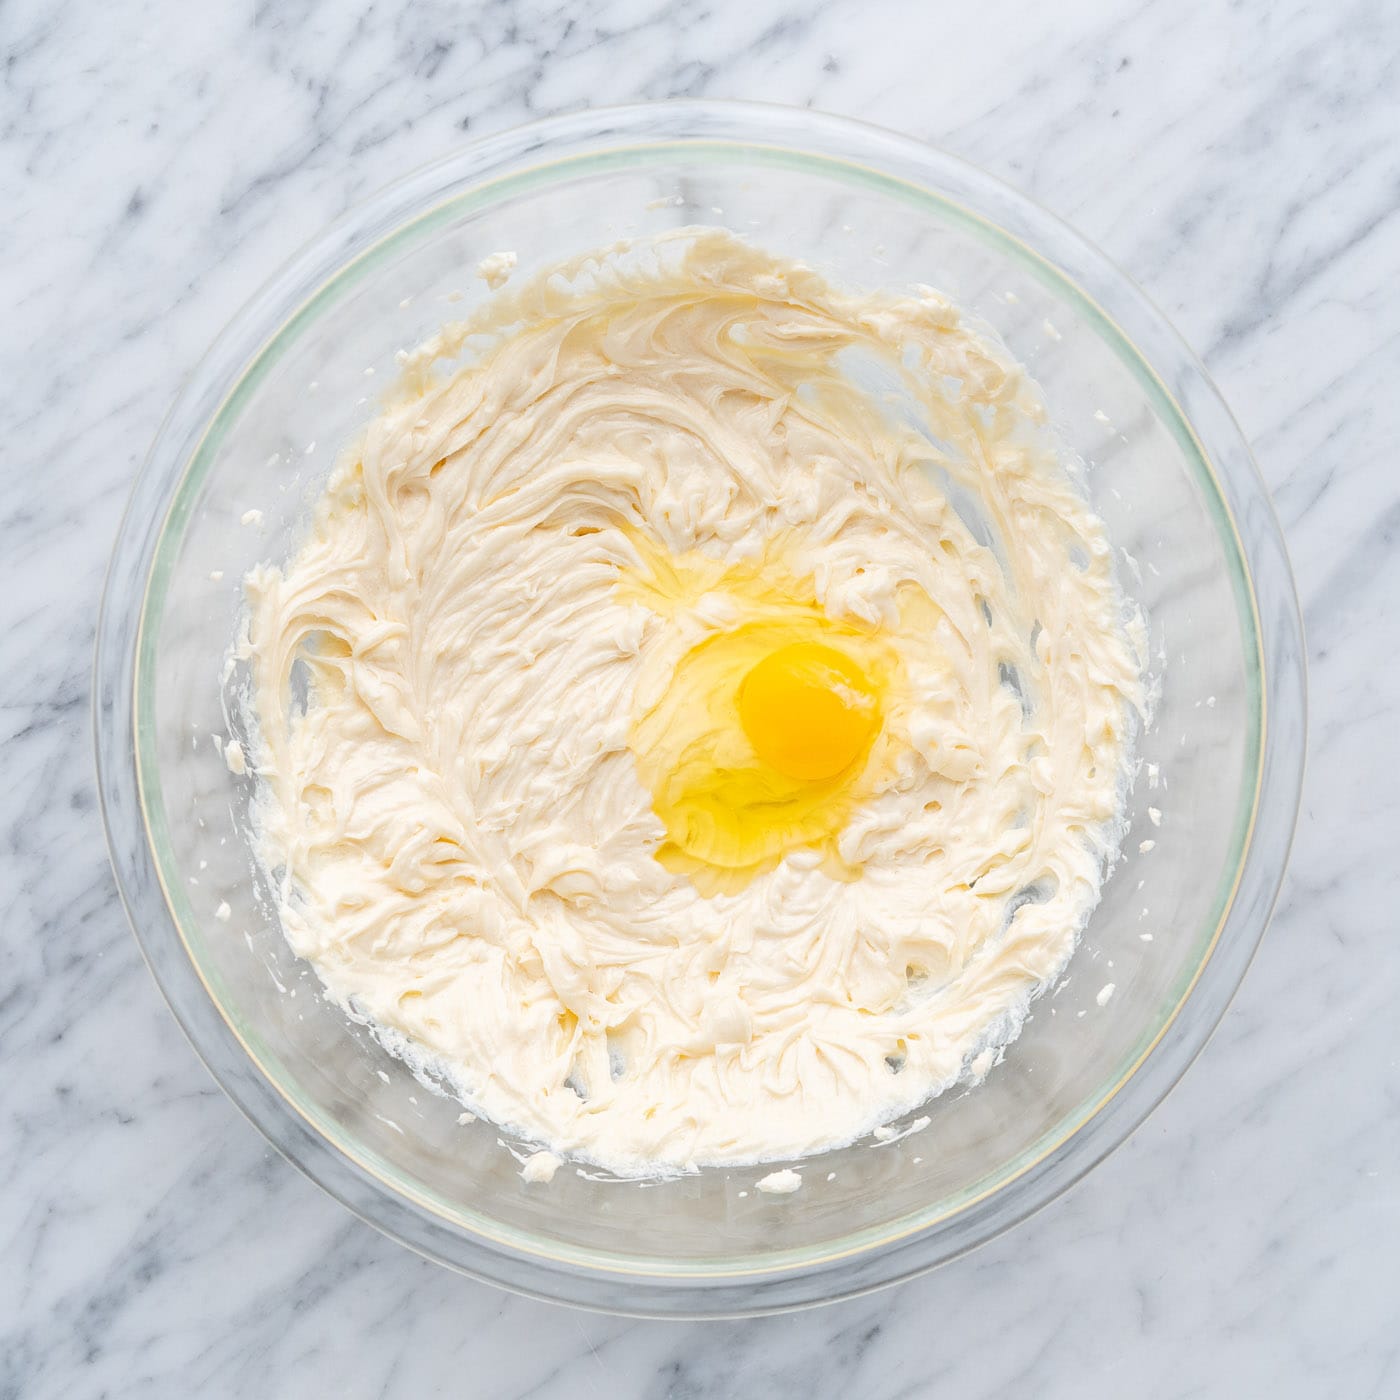 beating eggs into cream cheese mixture